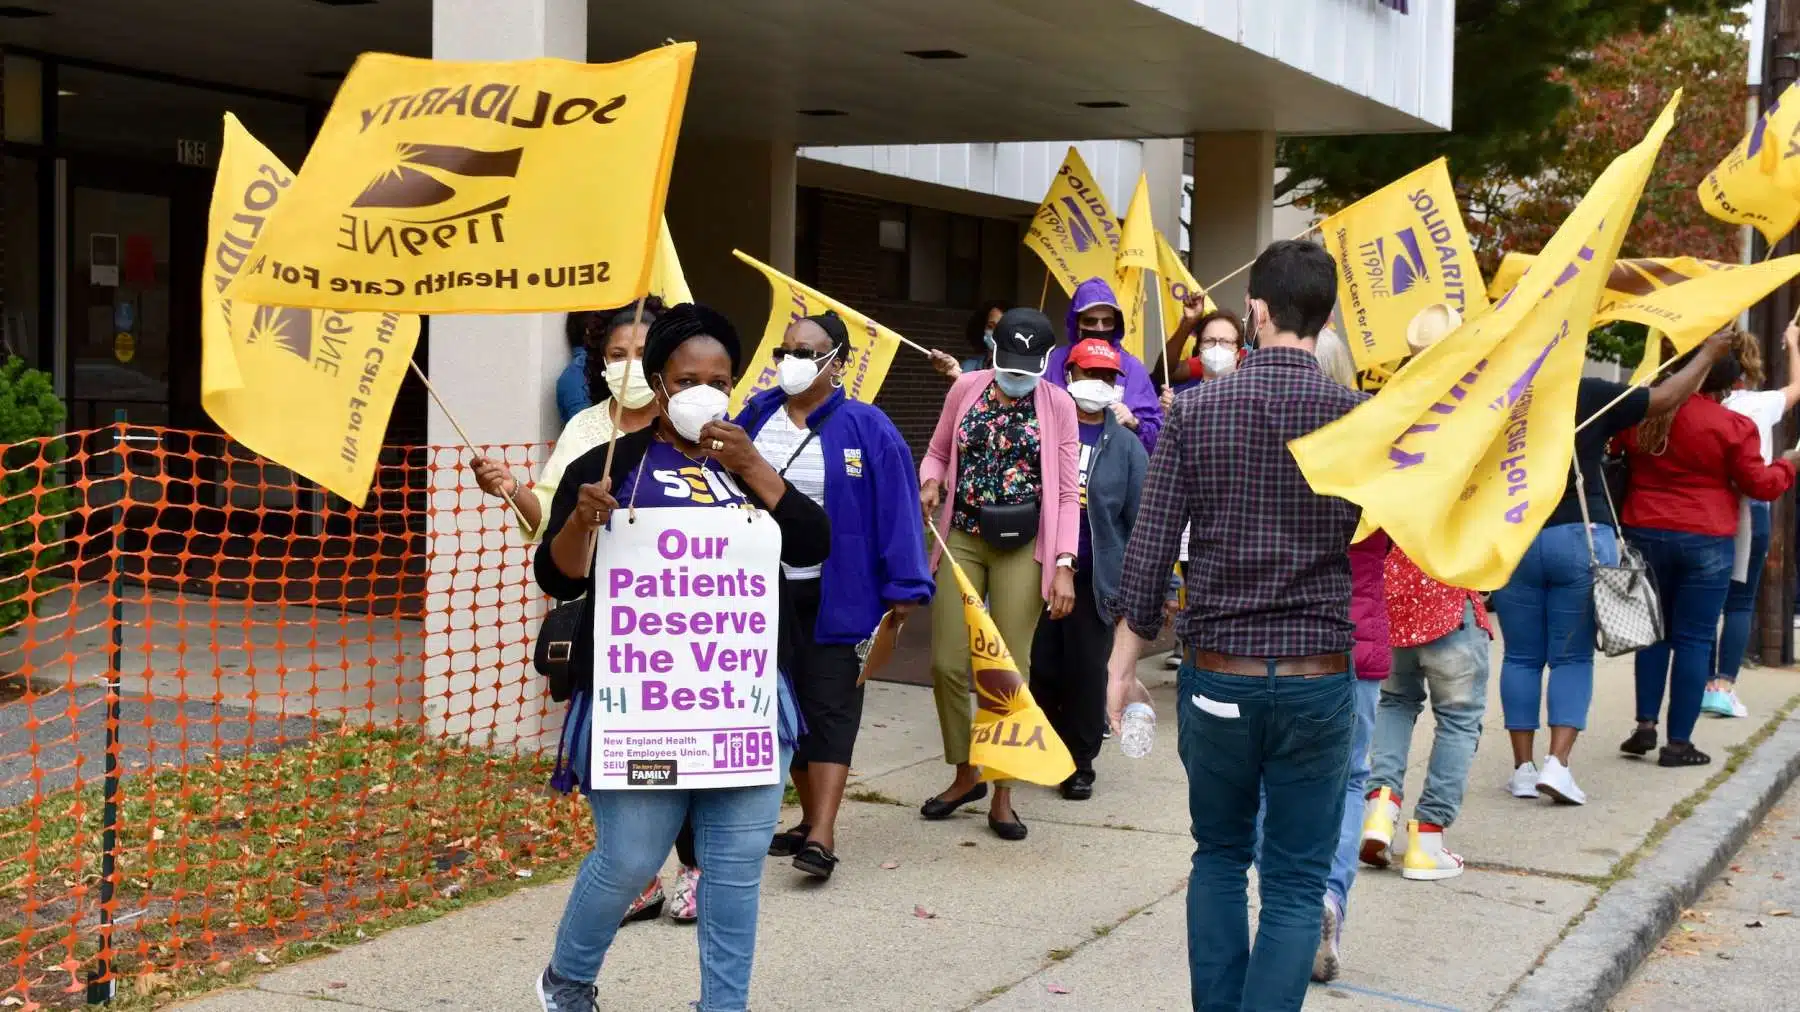 Bannister Nursing Home caregivers begin 3-day strike to demand safe staffing and better wages